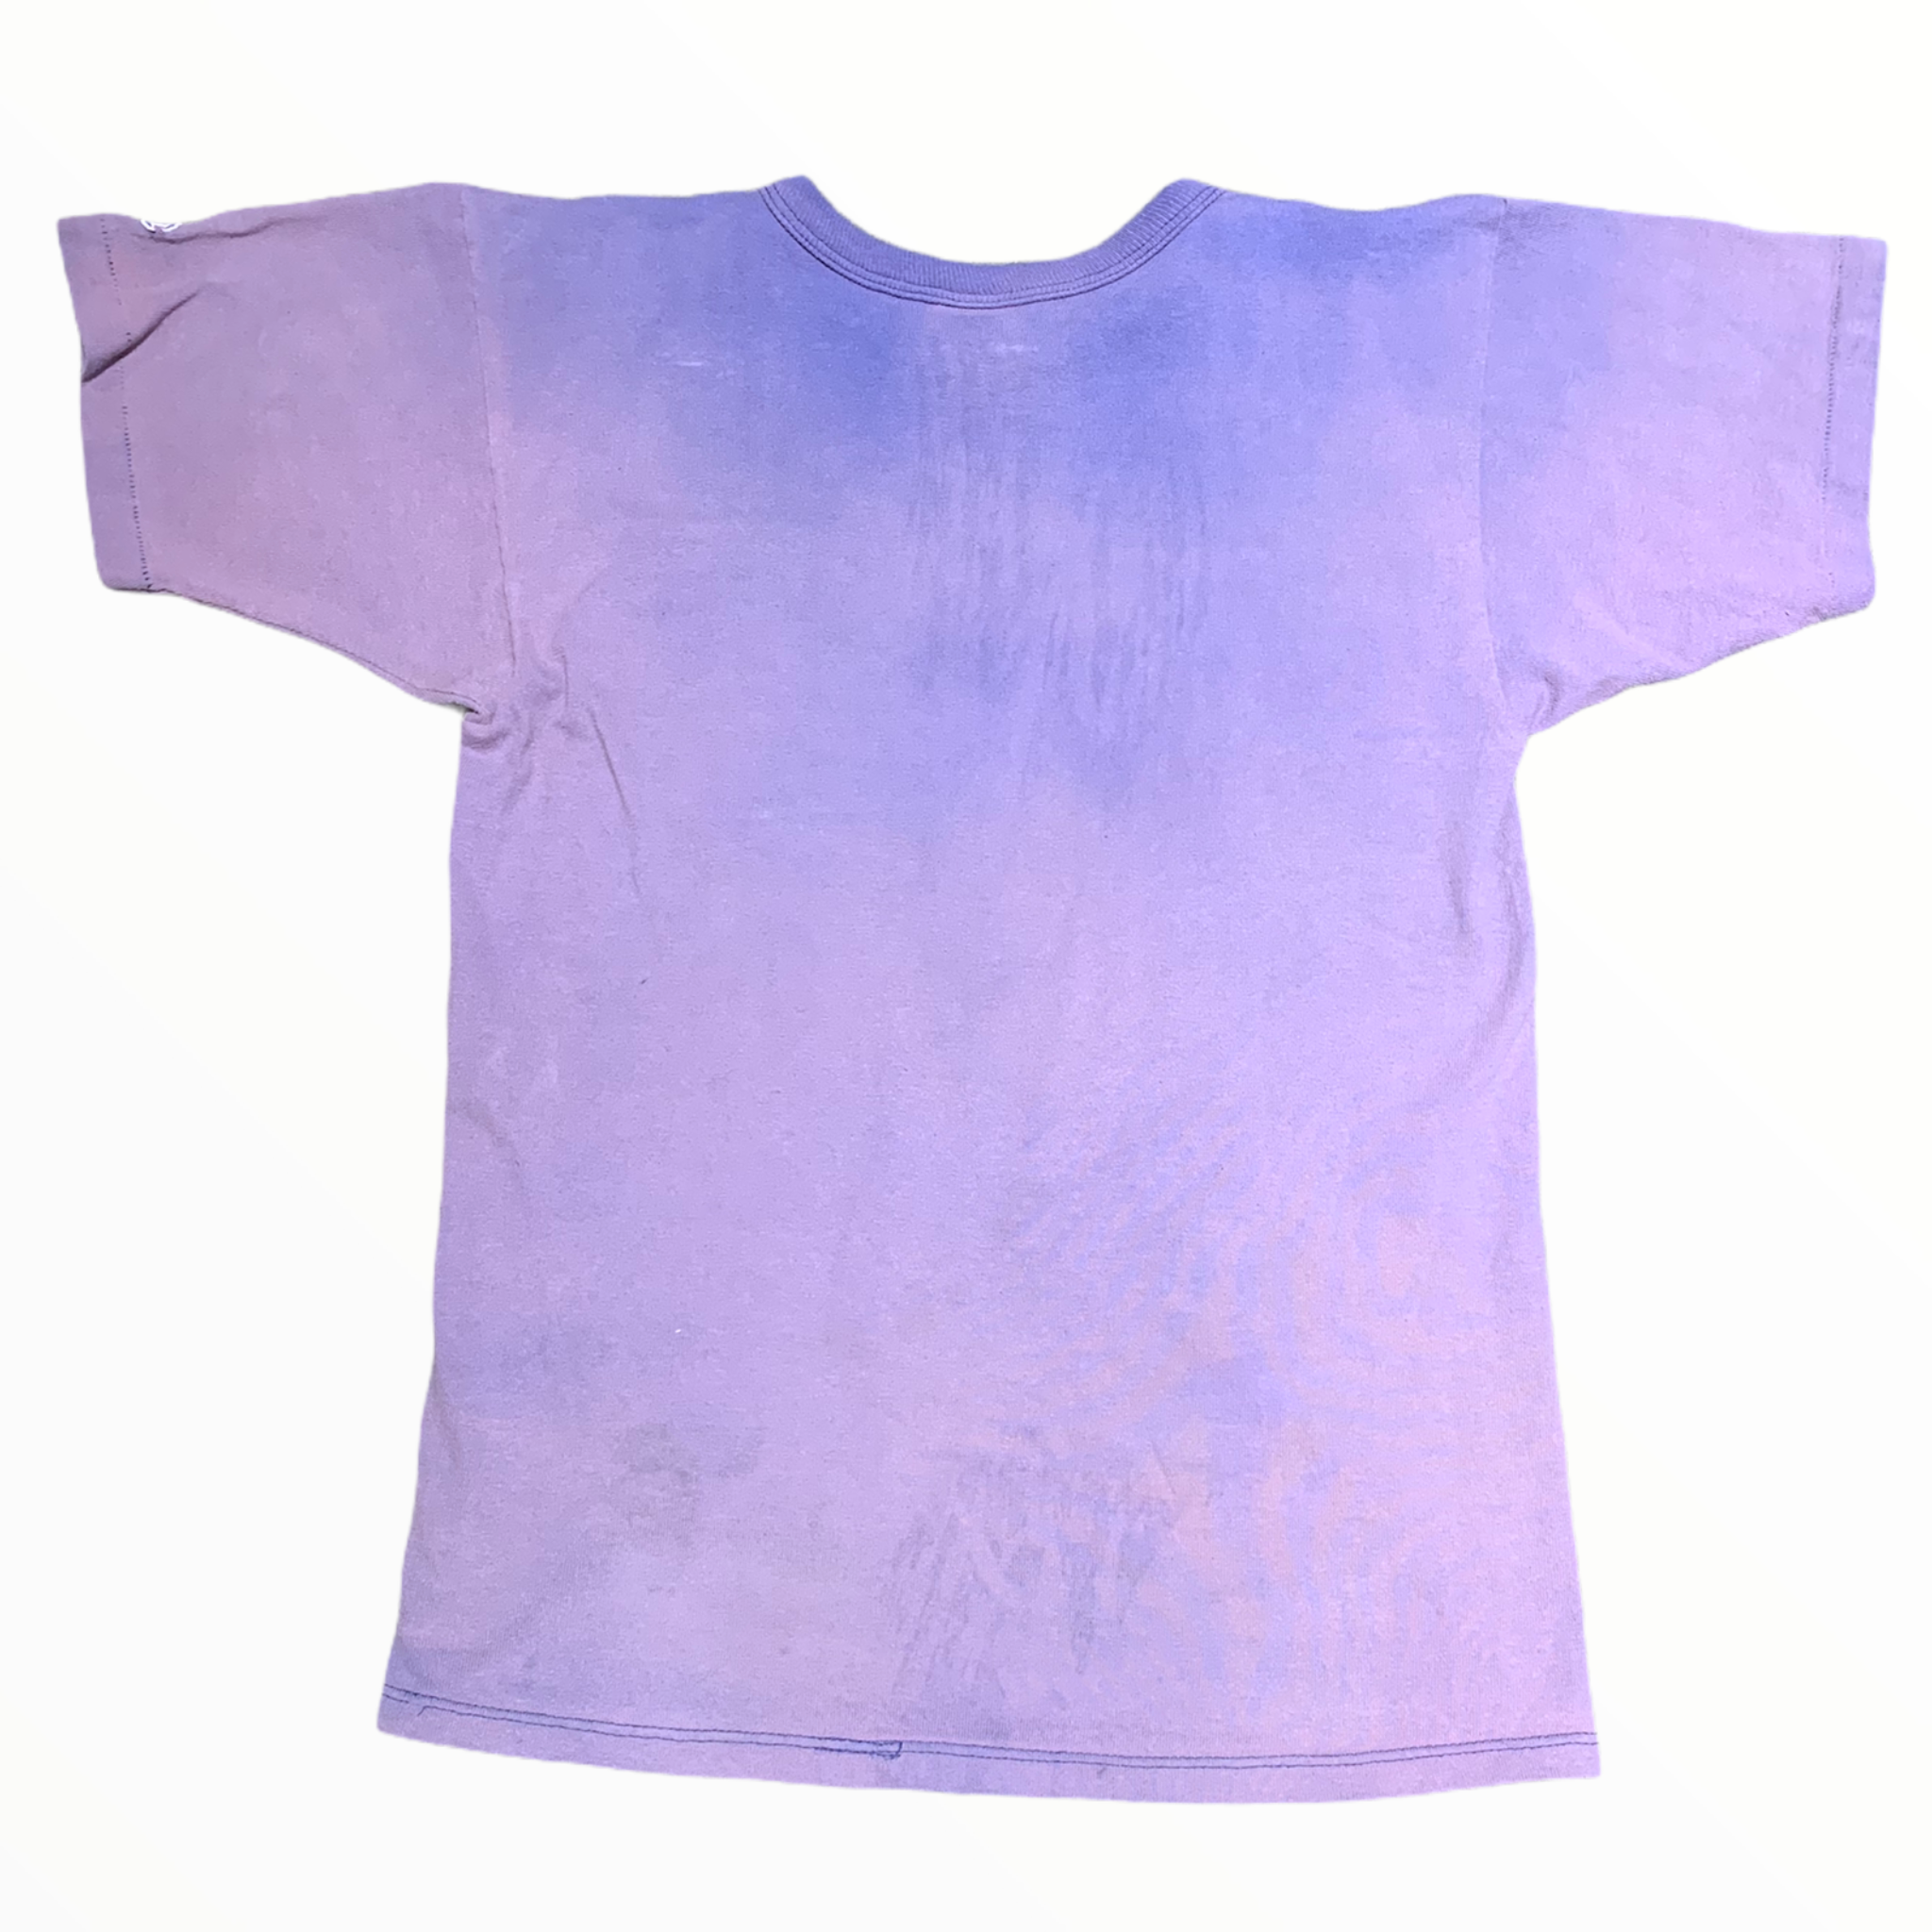 Vintage Faded Champion T-Shirt - Blue/Purple - S/M